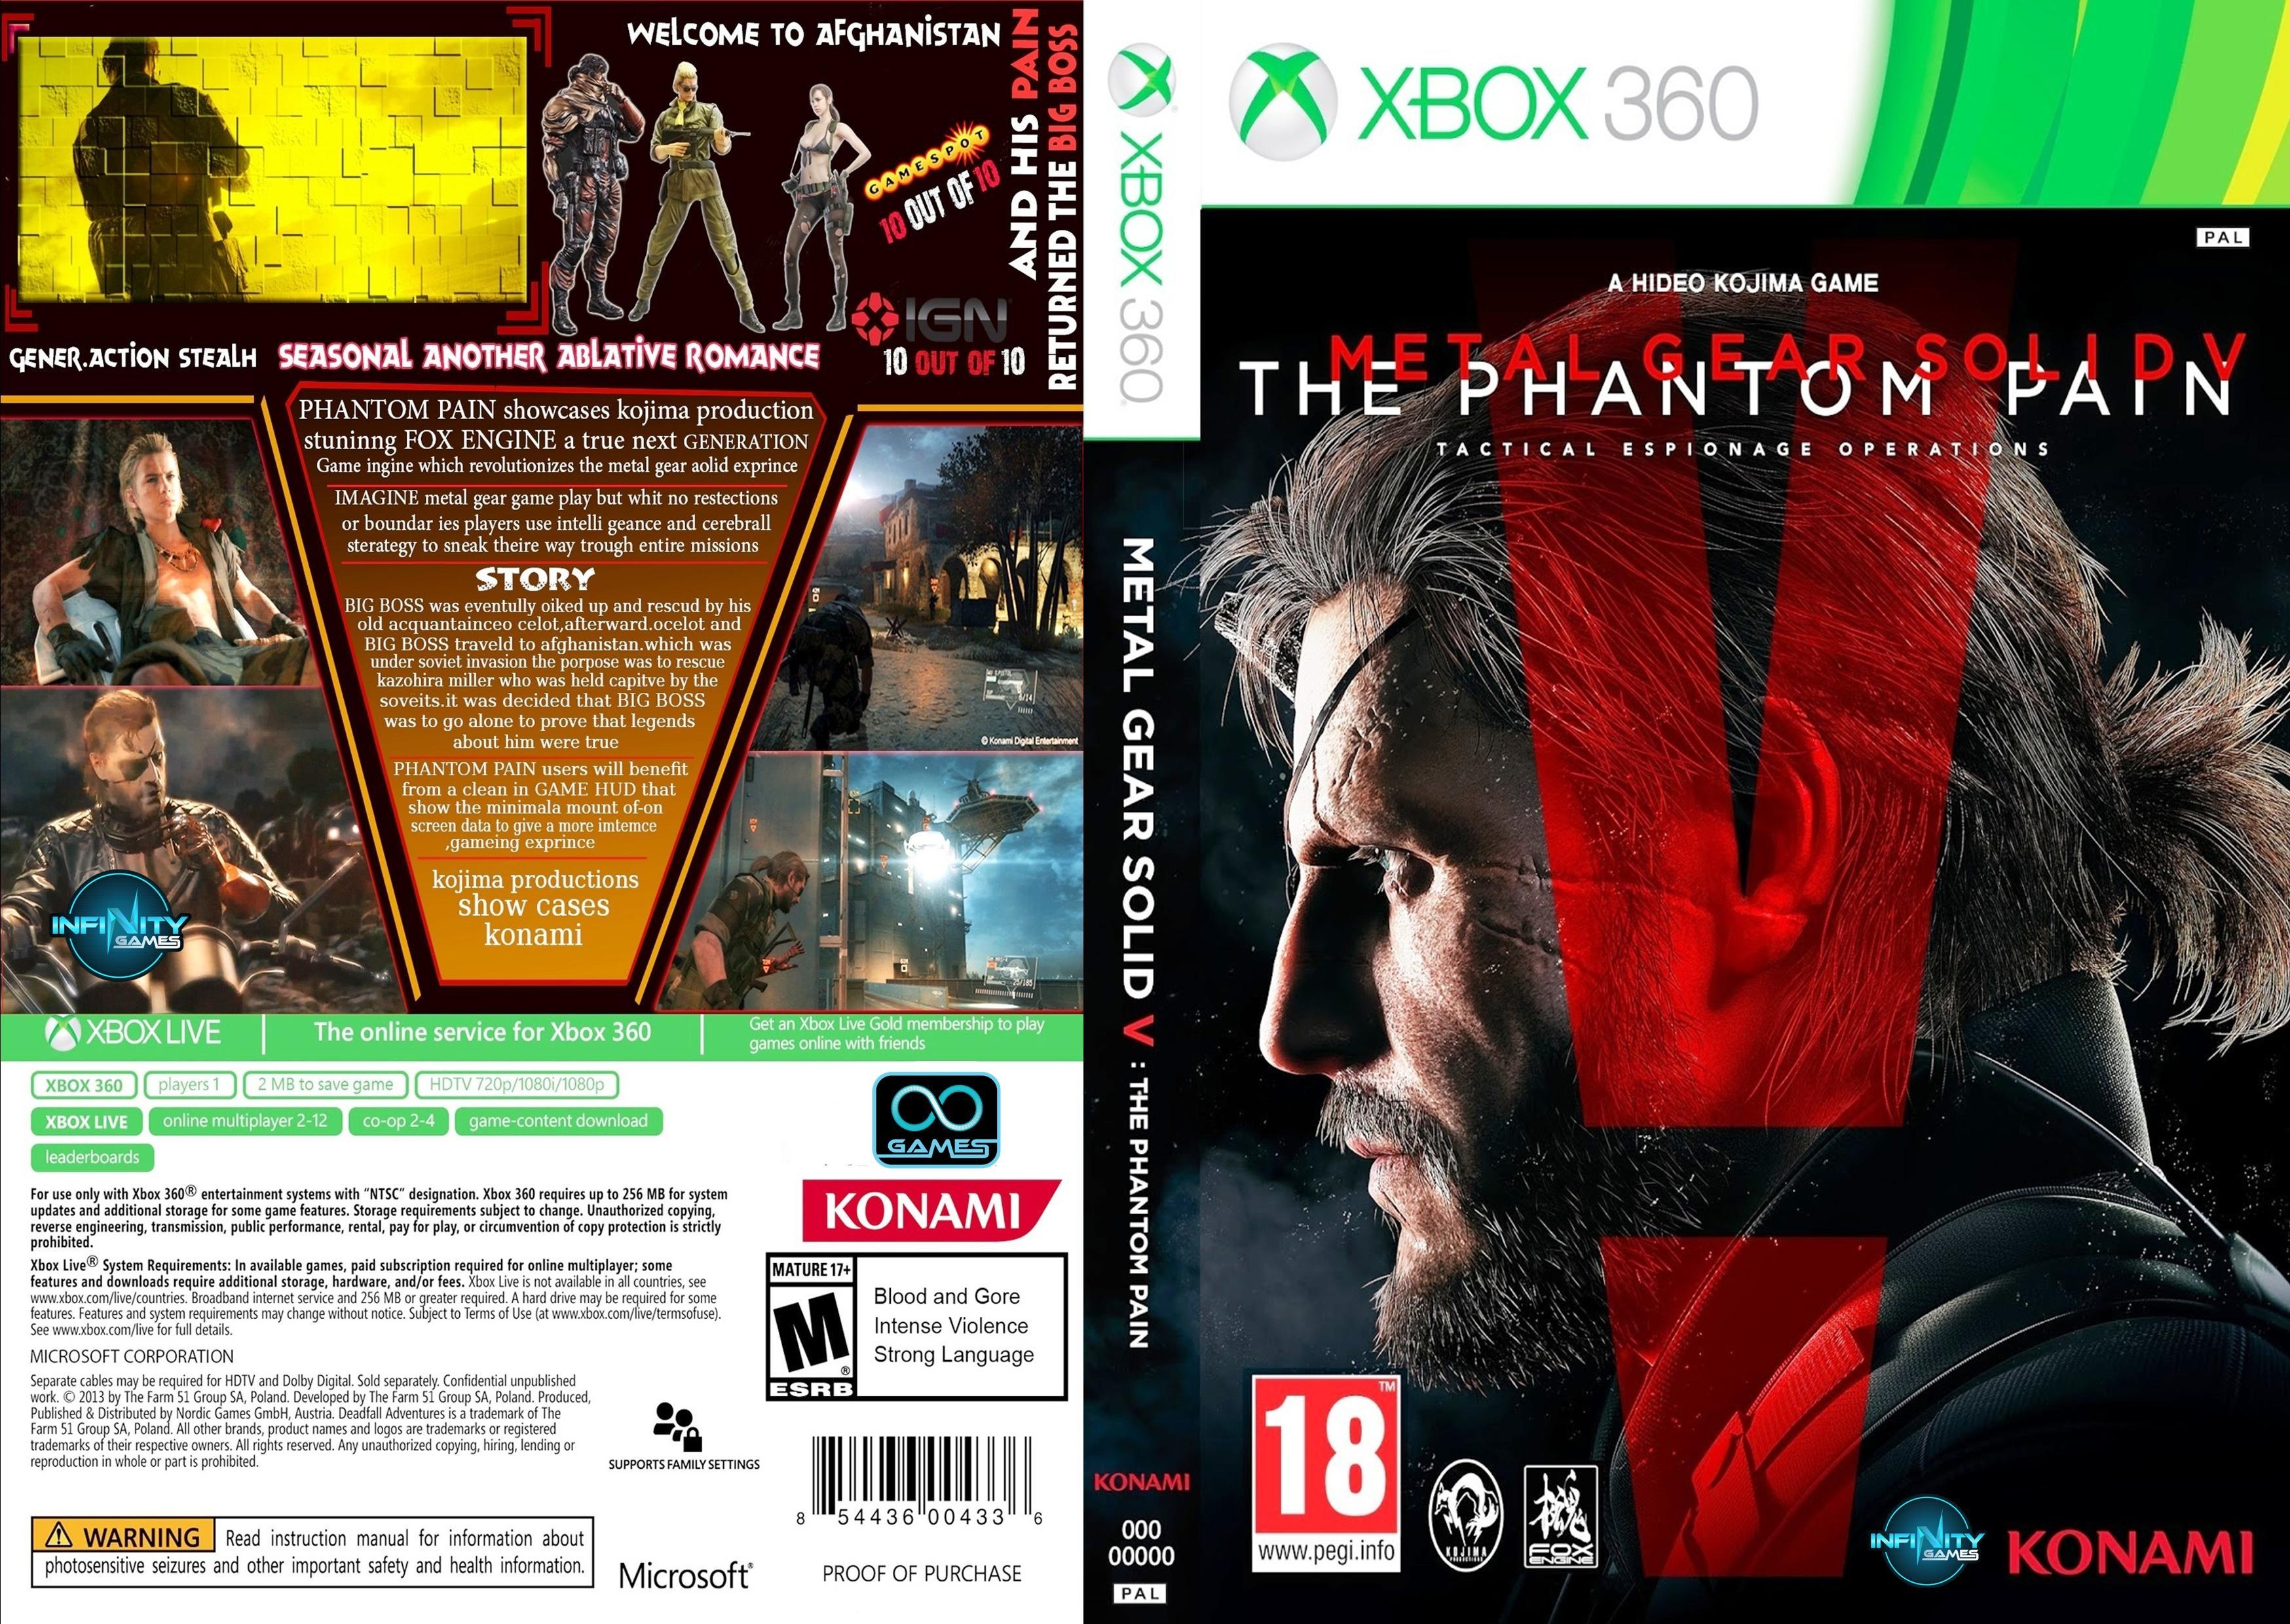 Metal Gear Solid V: The Phantom Pain box cover